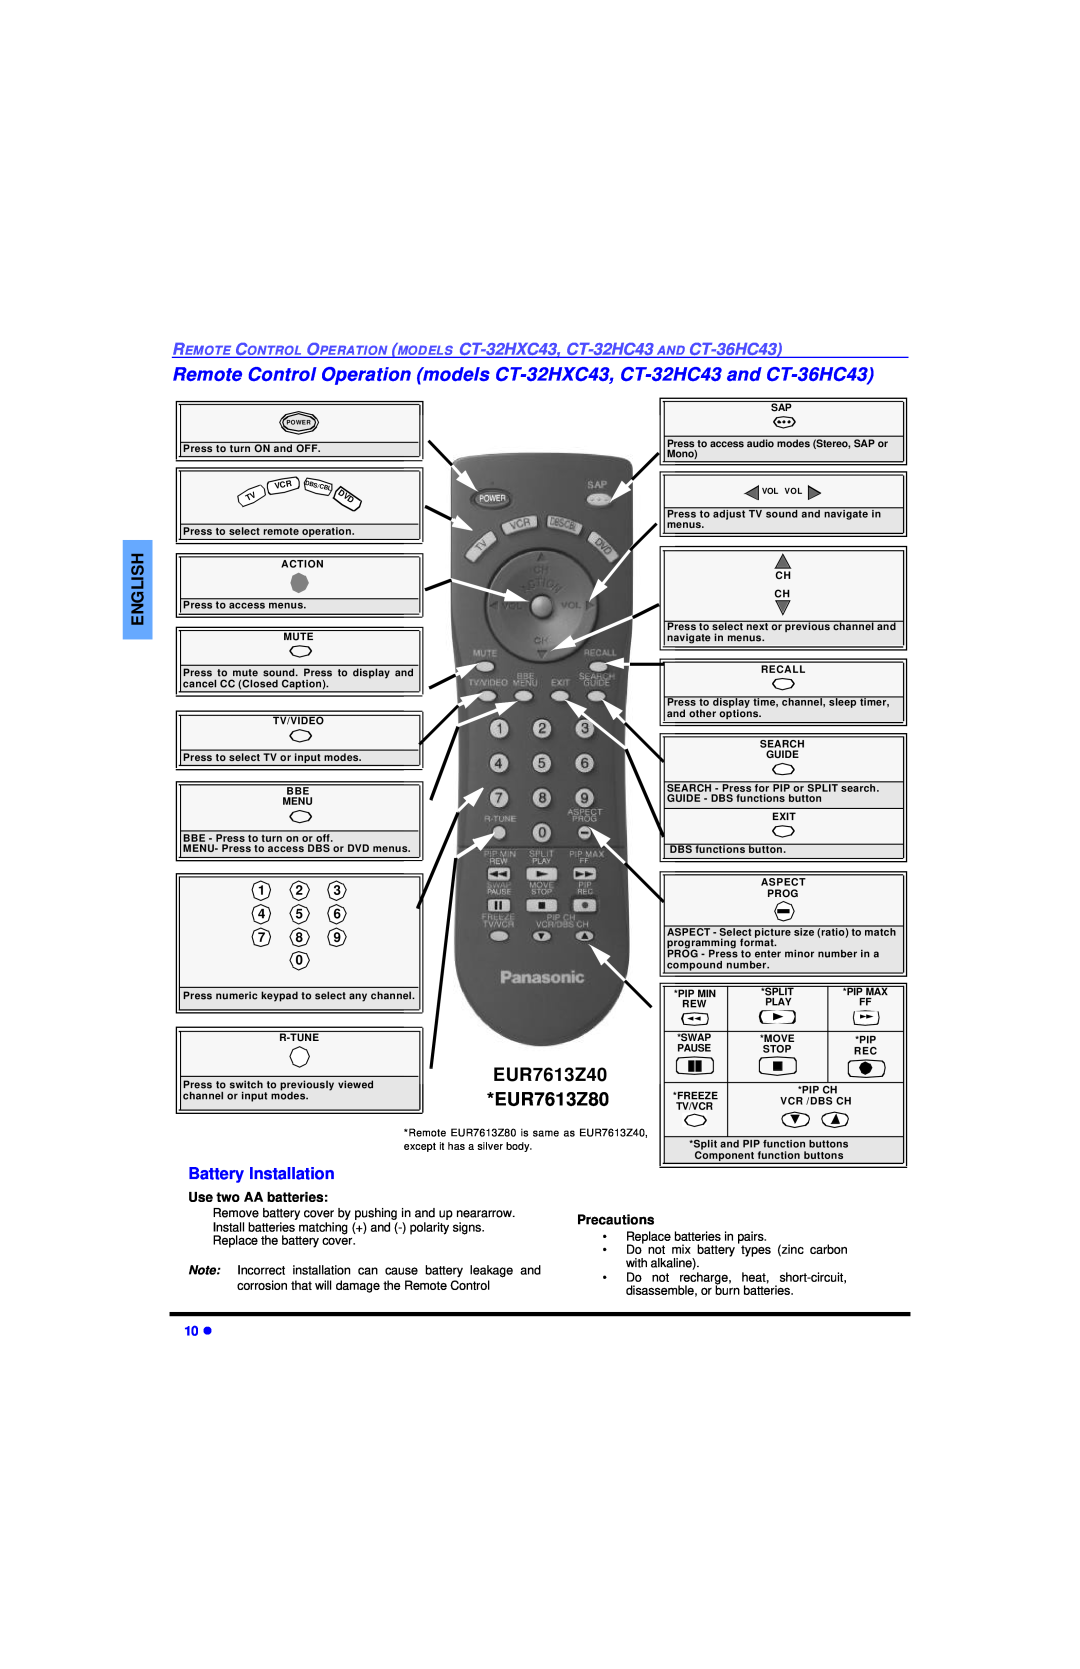 Panasonic CT 32HL43 Remote Control Operation models CT-32HXC43, CT-32HC43 and CT-36HC43, Battery Installation 